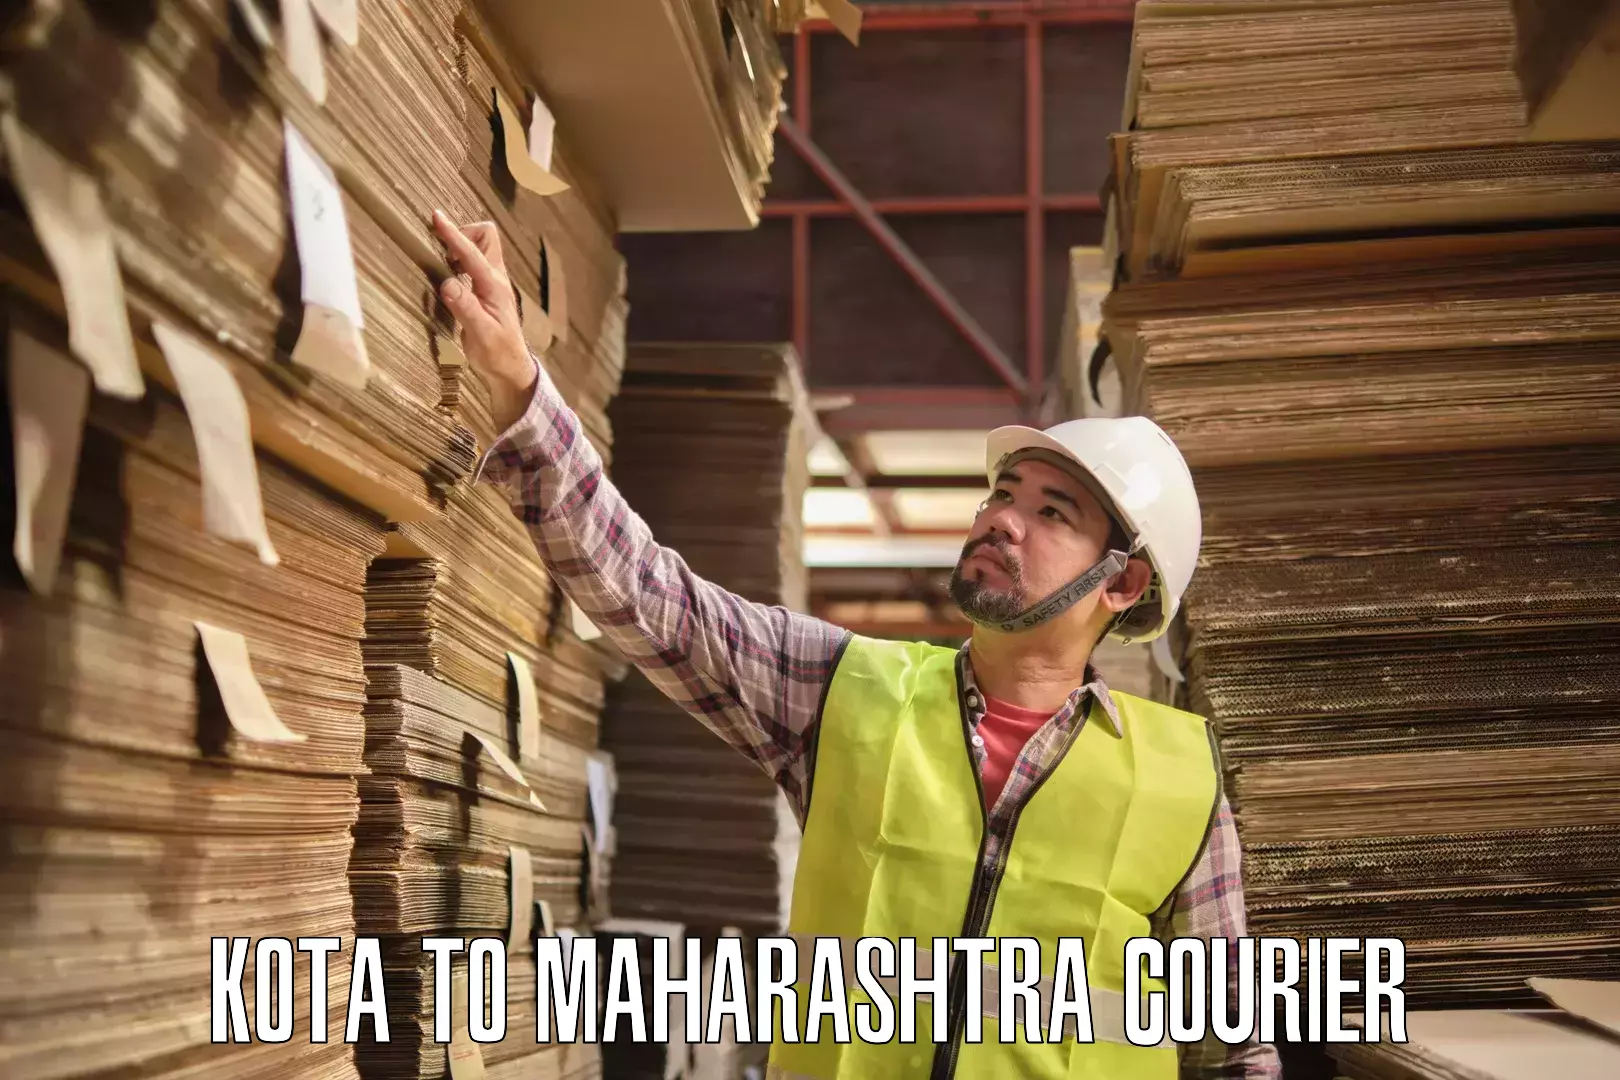 Reliable delivery network Kota to Maharashtra